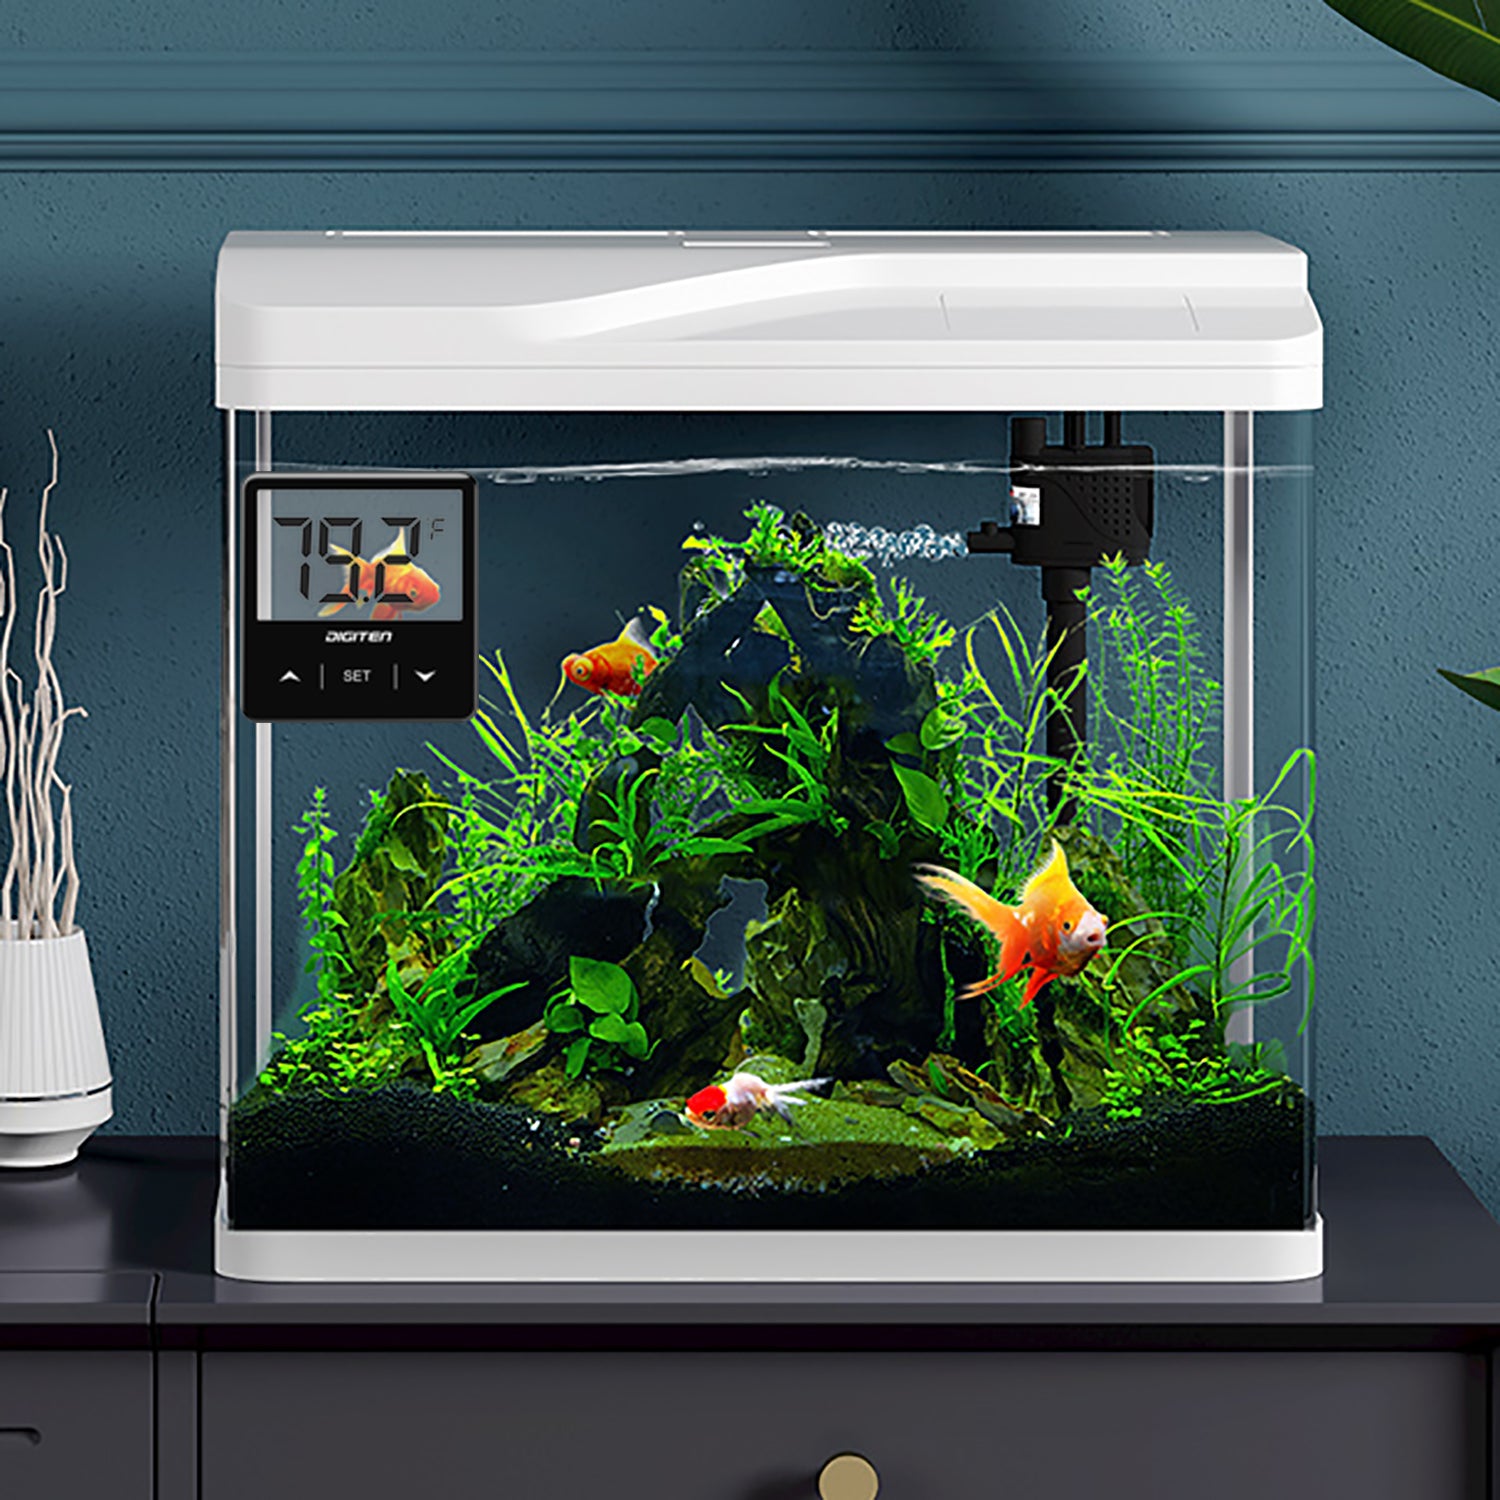 DIGITEN Fish Tank Thermometer Digital Aquarium Thermometer with Large